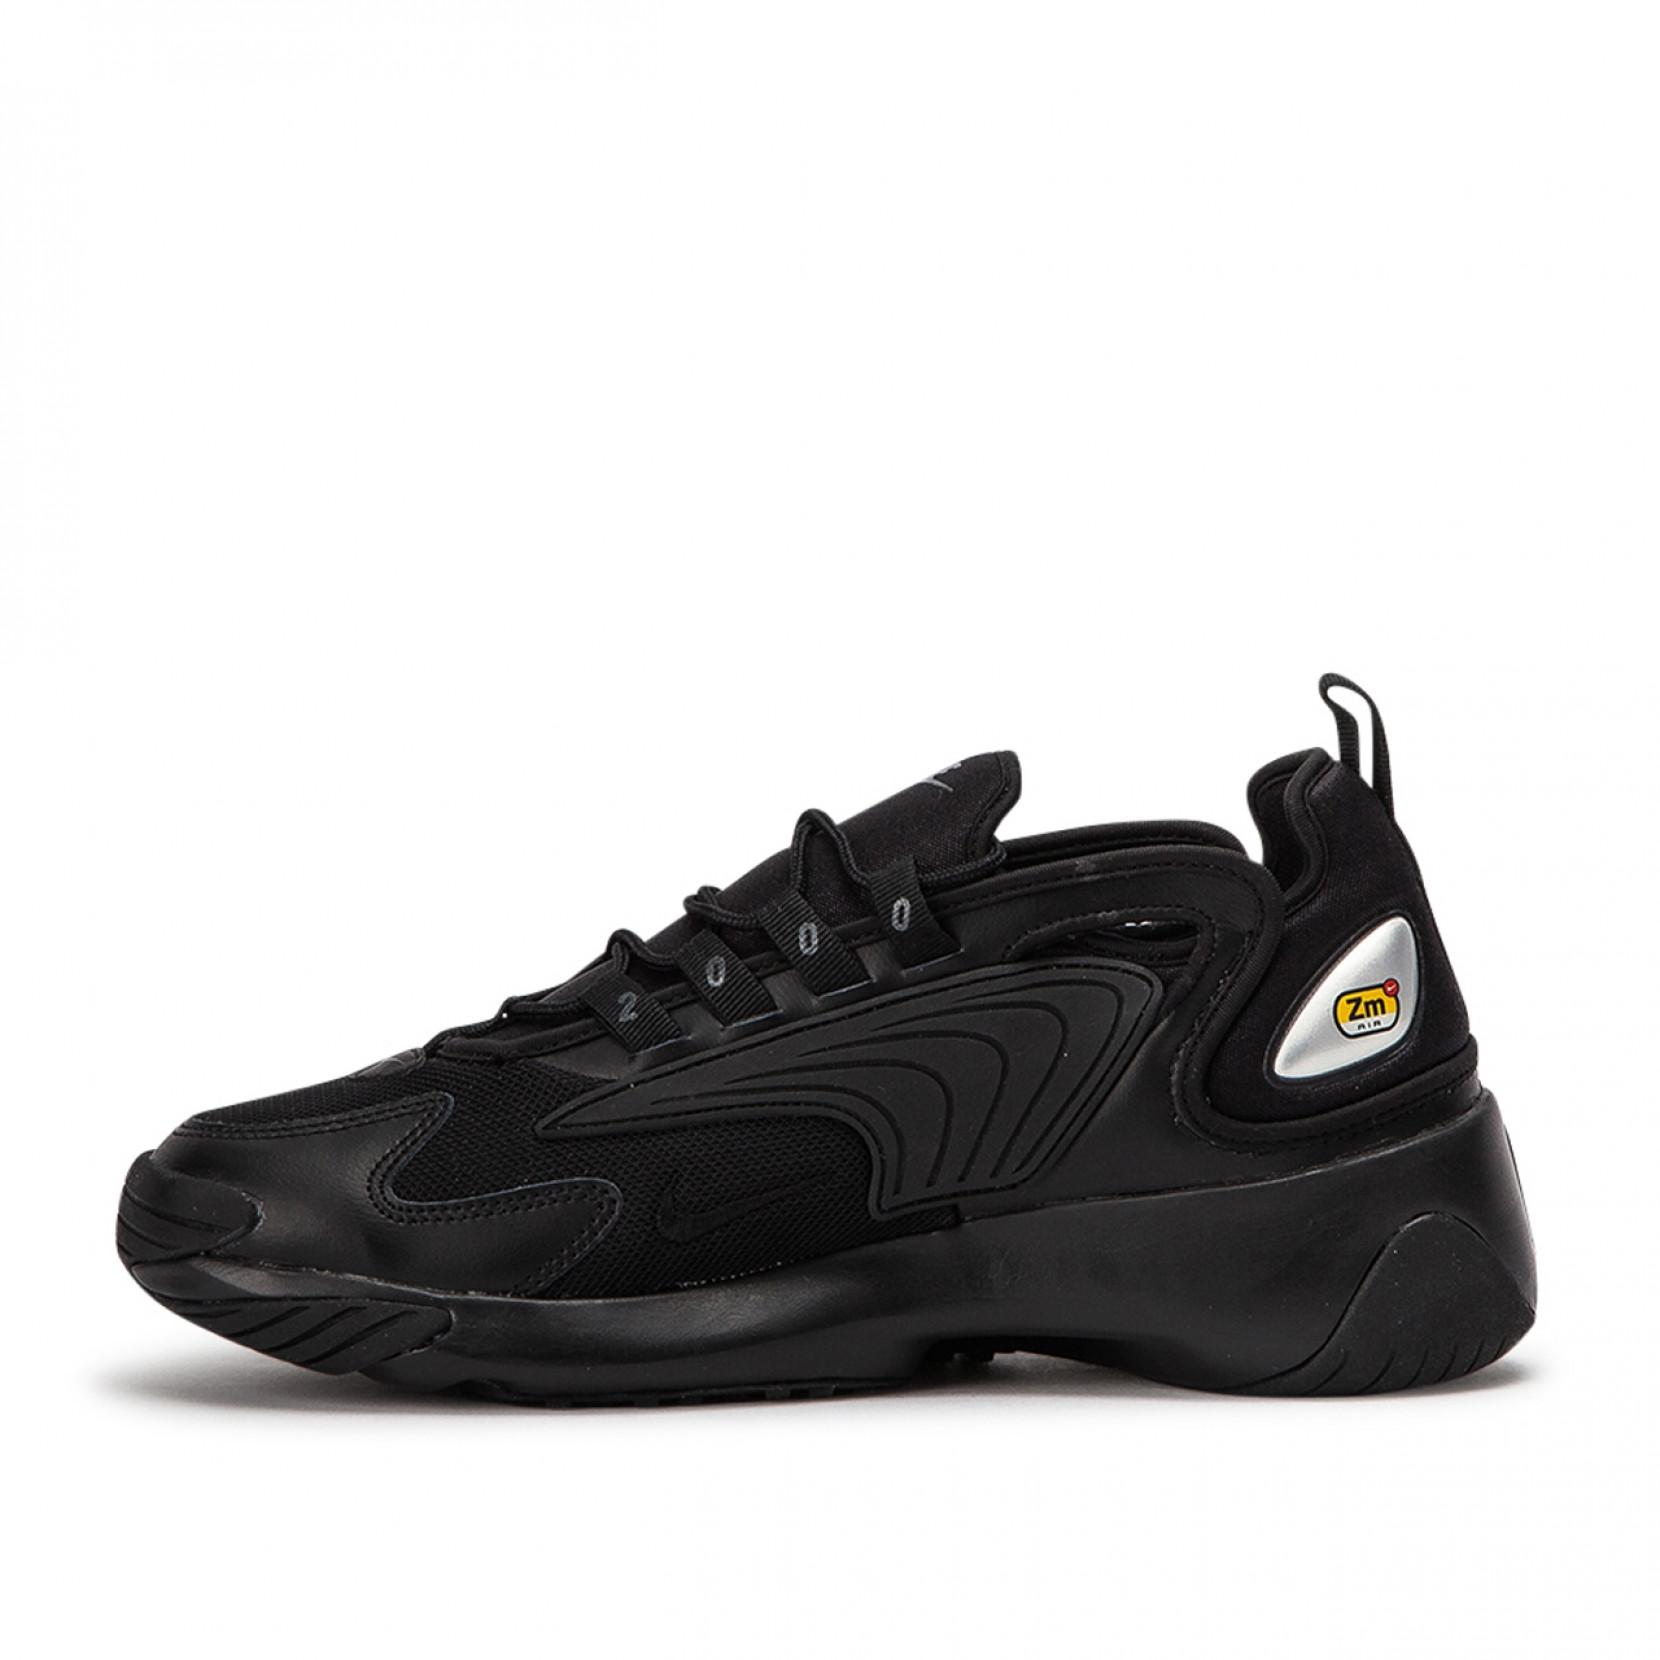 Nike Zoom 2k Shoe in Black/Black (Black) for Men - Lyst